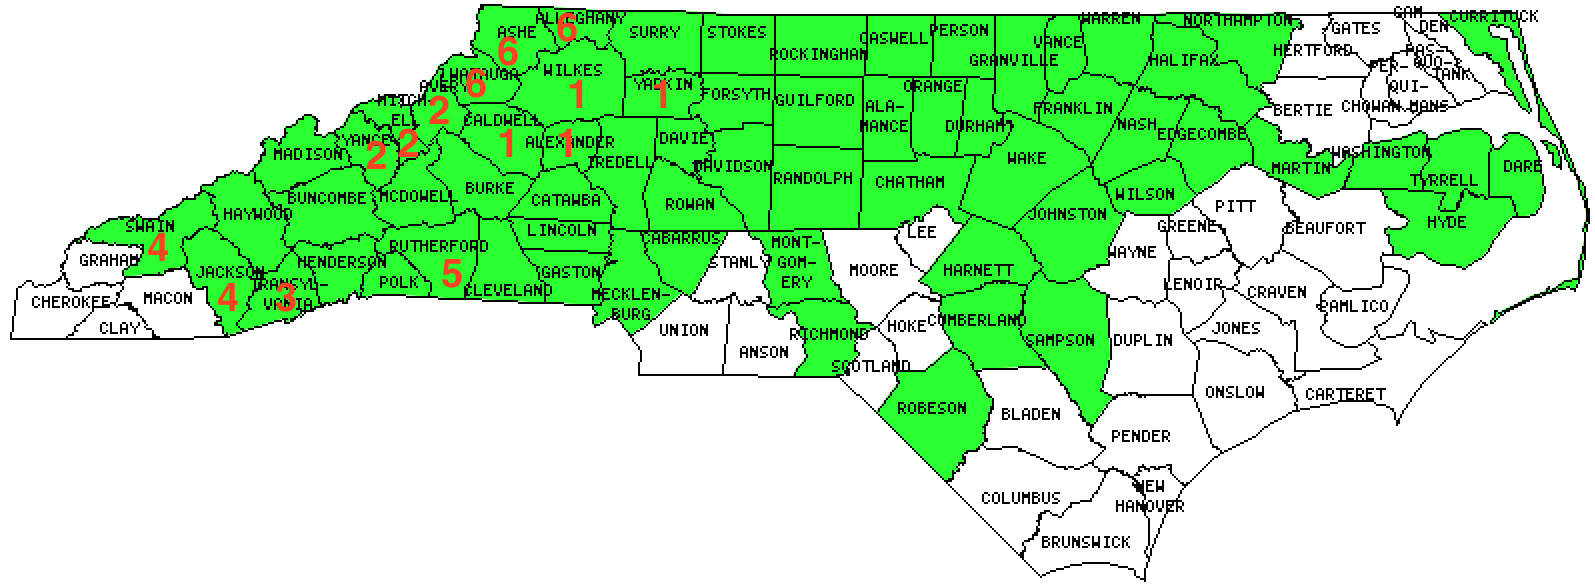 North Carolina County Counting 2015. Image by howderfamily.com using mob-rule.com